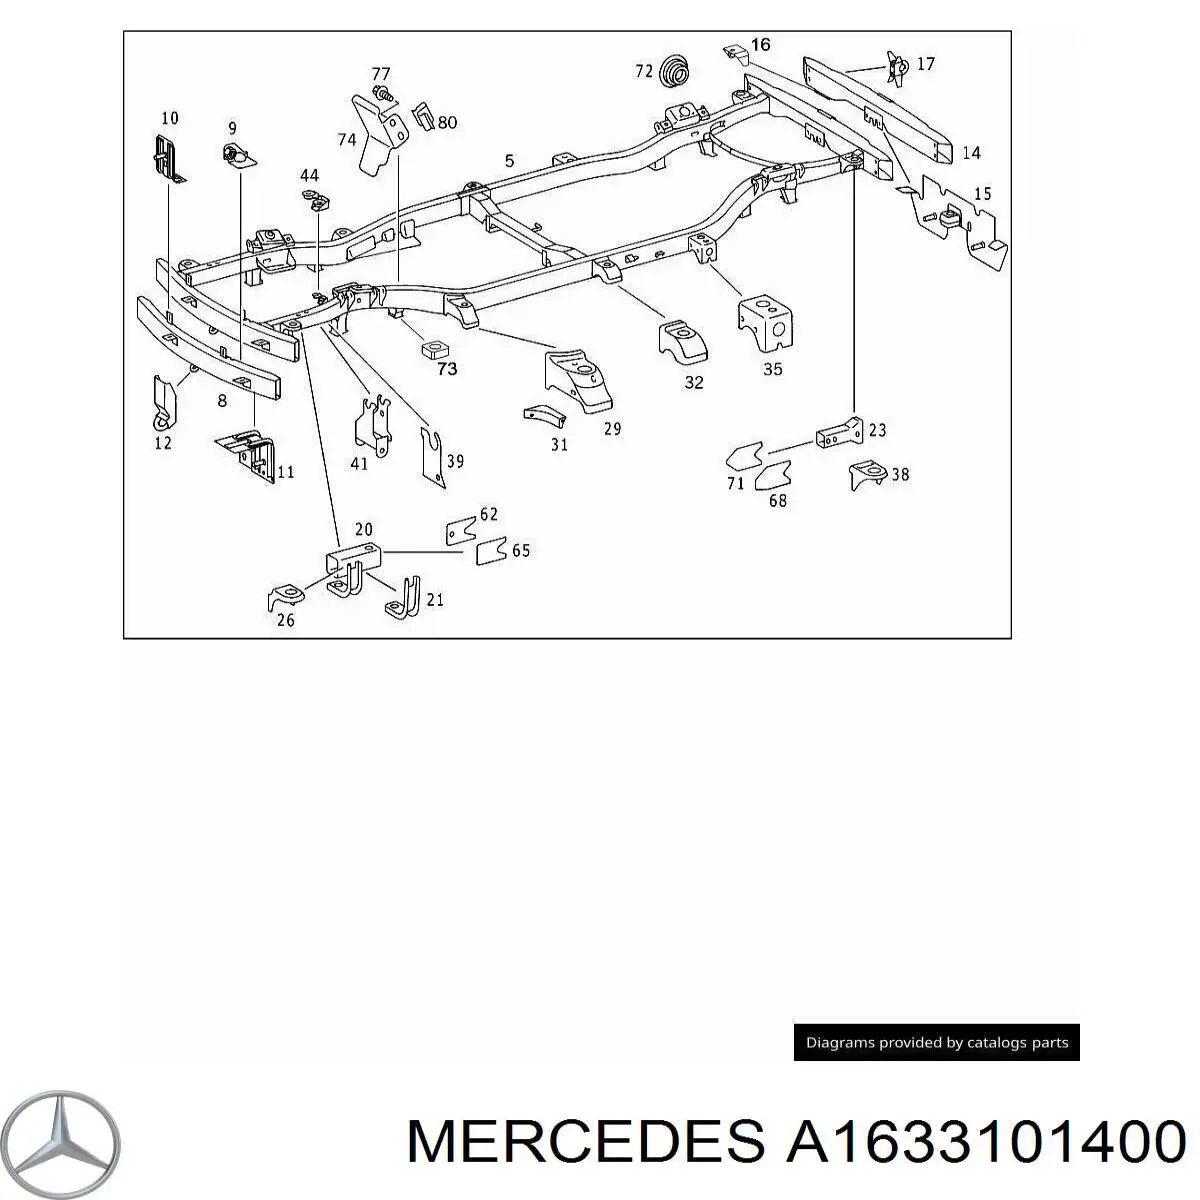 Chassi de carroçaria para Mercedes ML/GLE (W163)